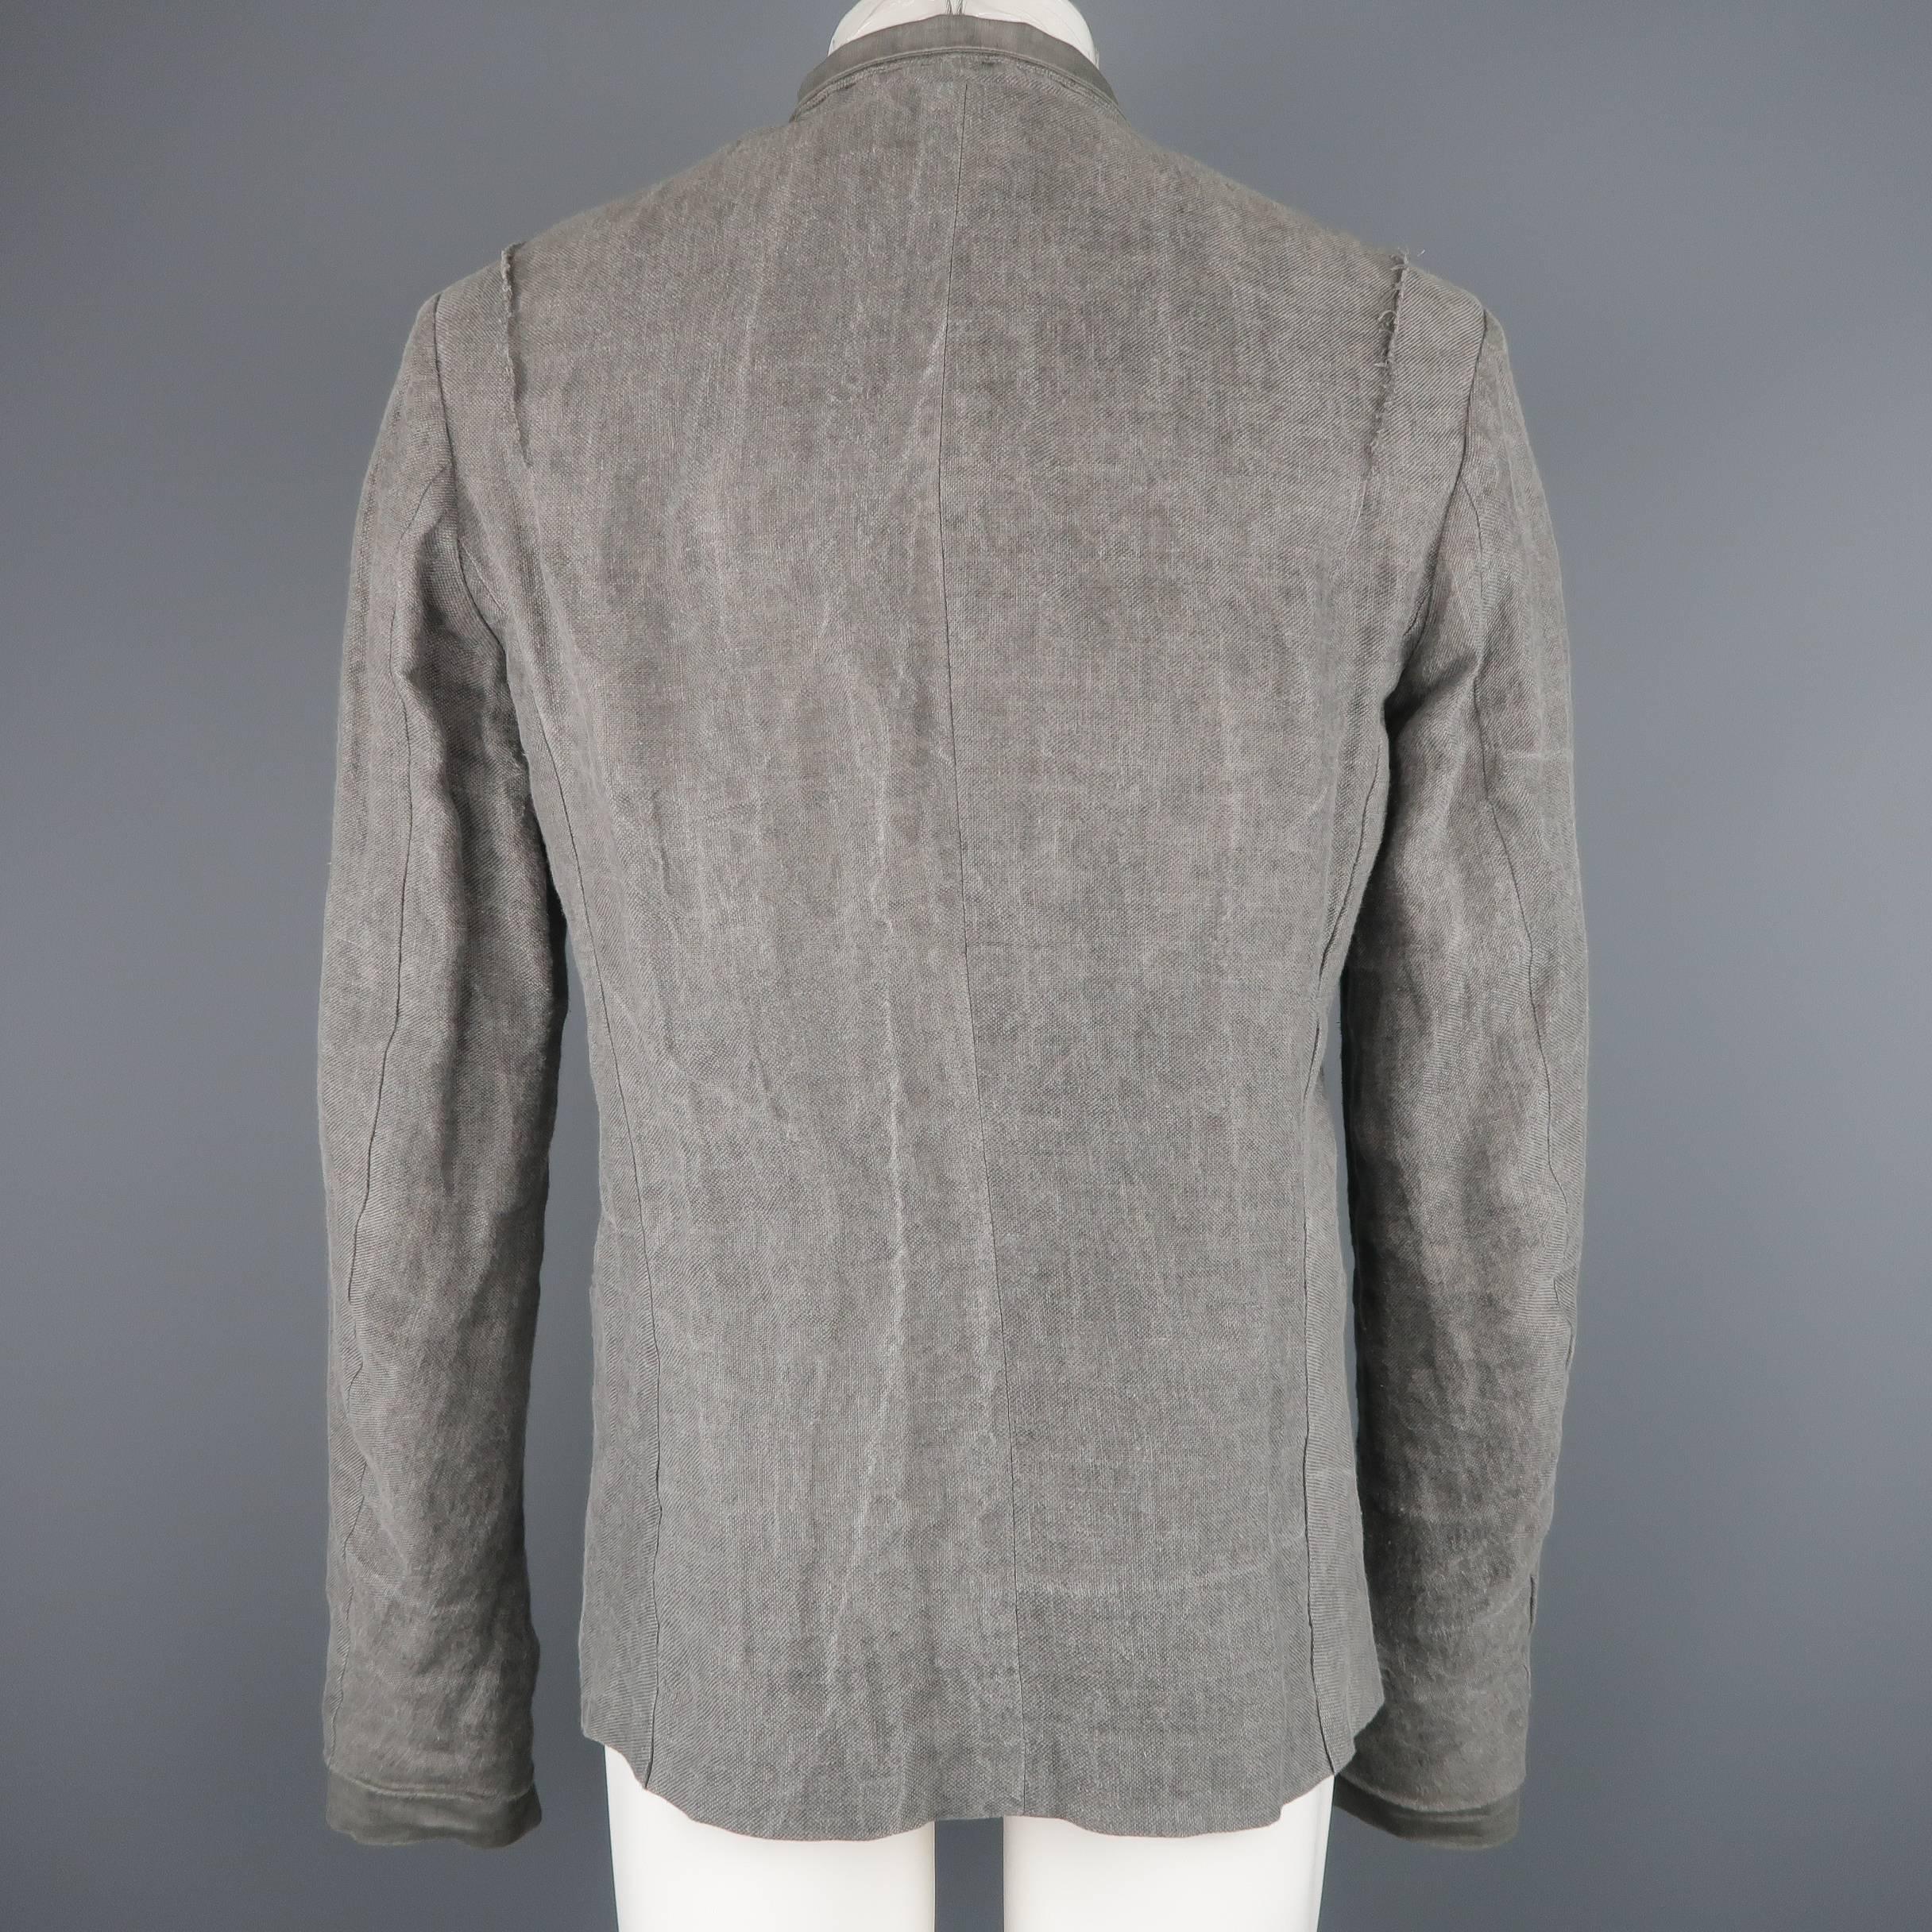 Men's LOST & FOUND S Gray Distressed Hemp Blend Layered Cuff Jacket 3